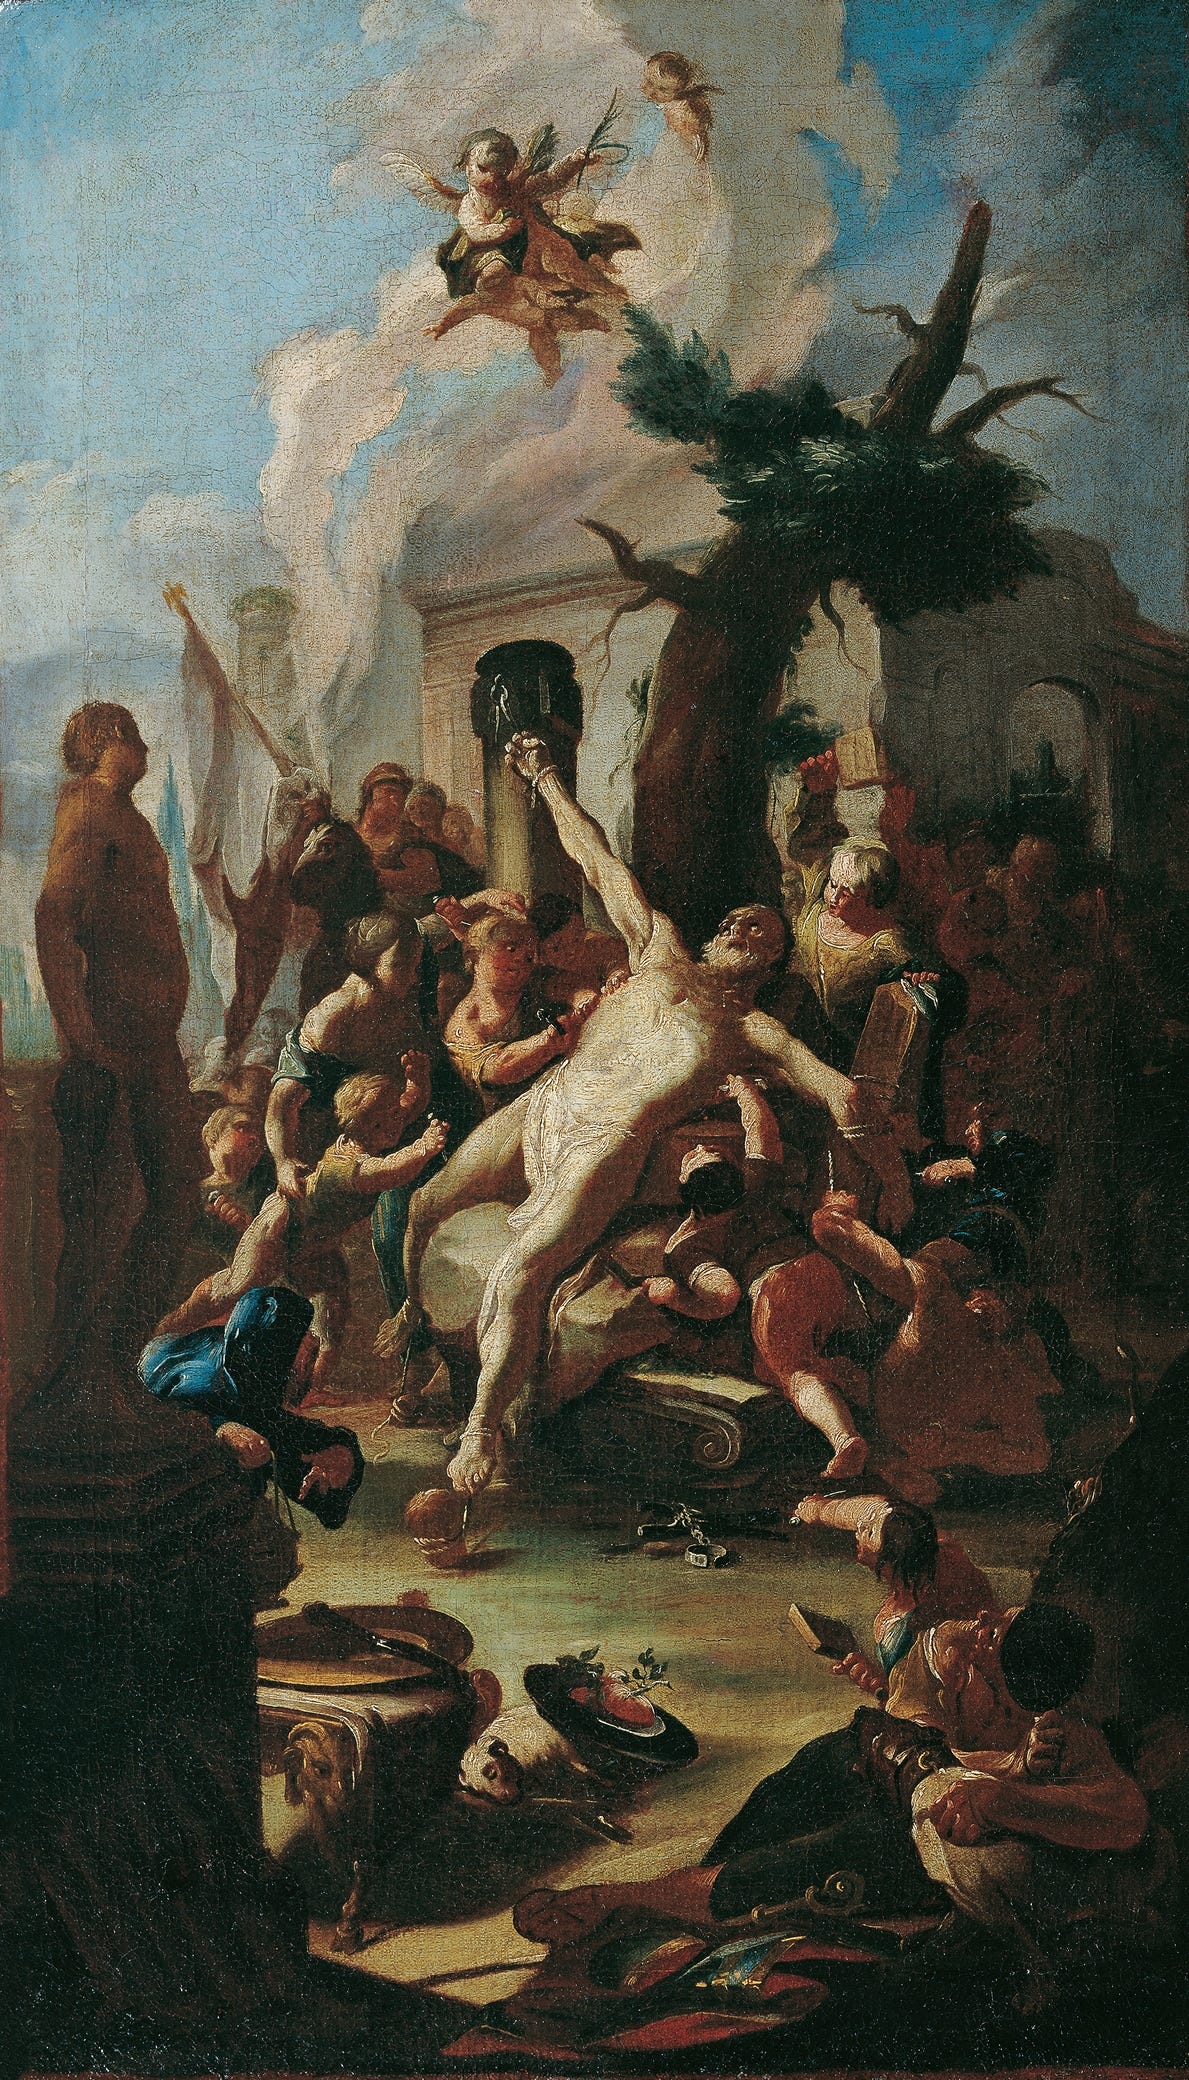 Die Marter des heiligen Cassian (1751-1753) by Paul Troger (Austrian, 1698-1762)